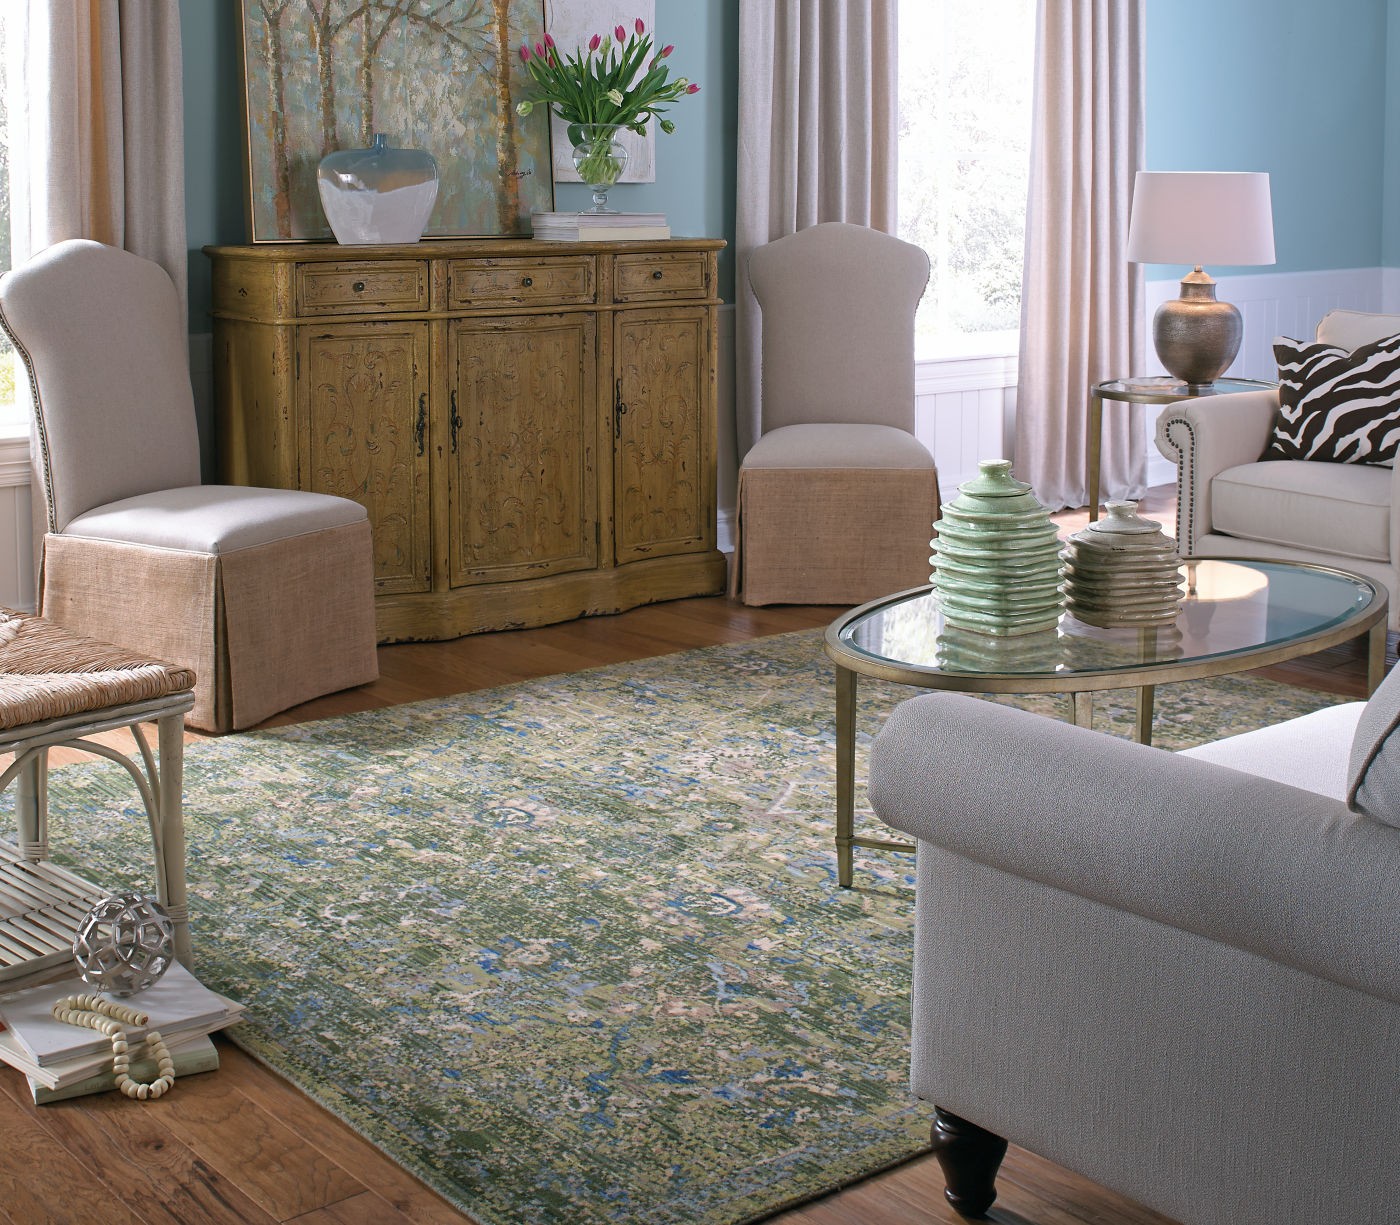 Interior design of living room | Chillicothe Carpet